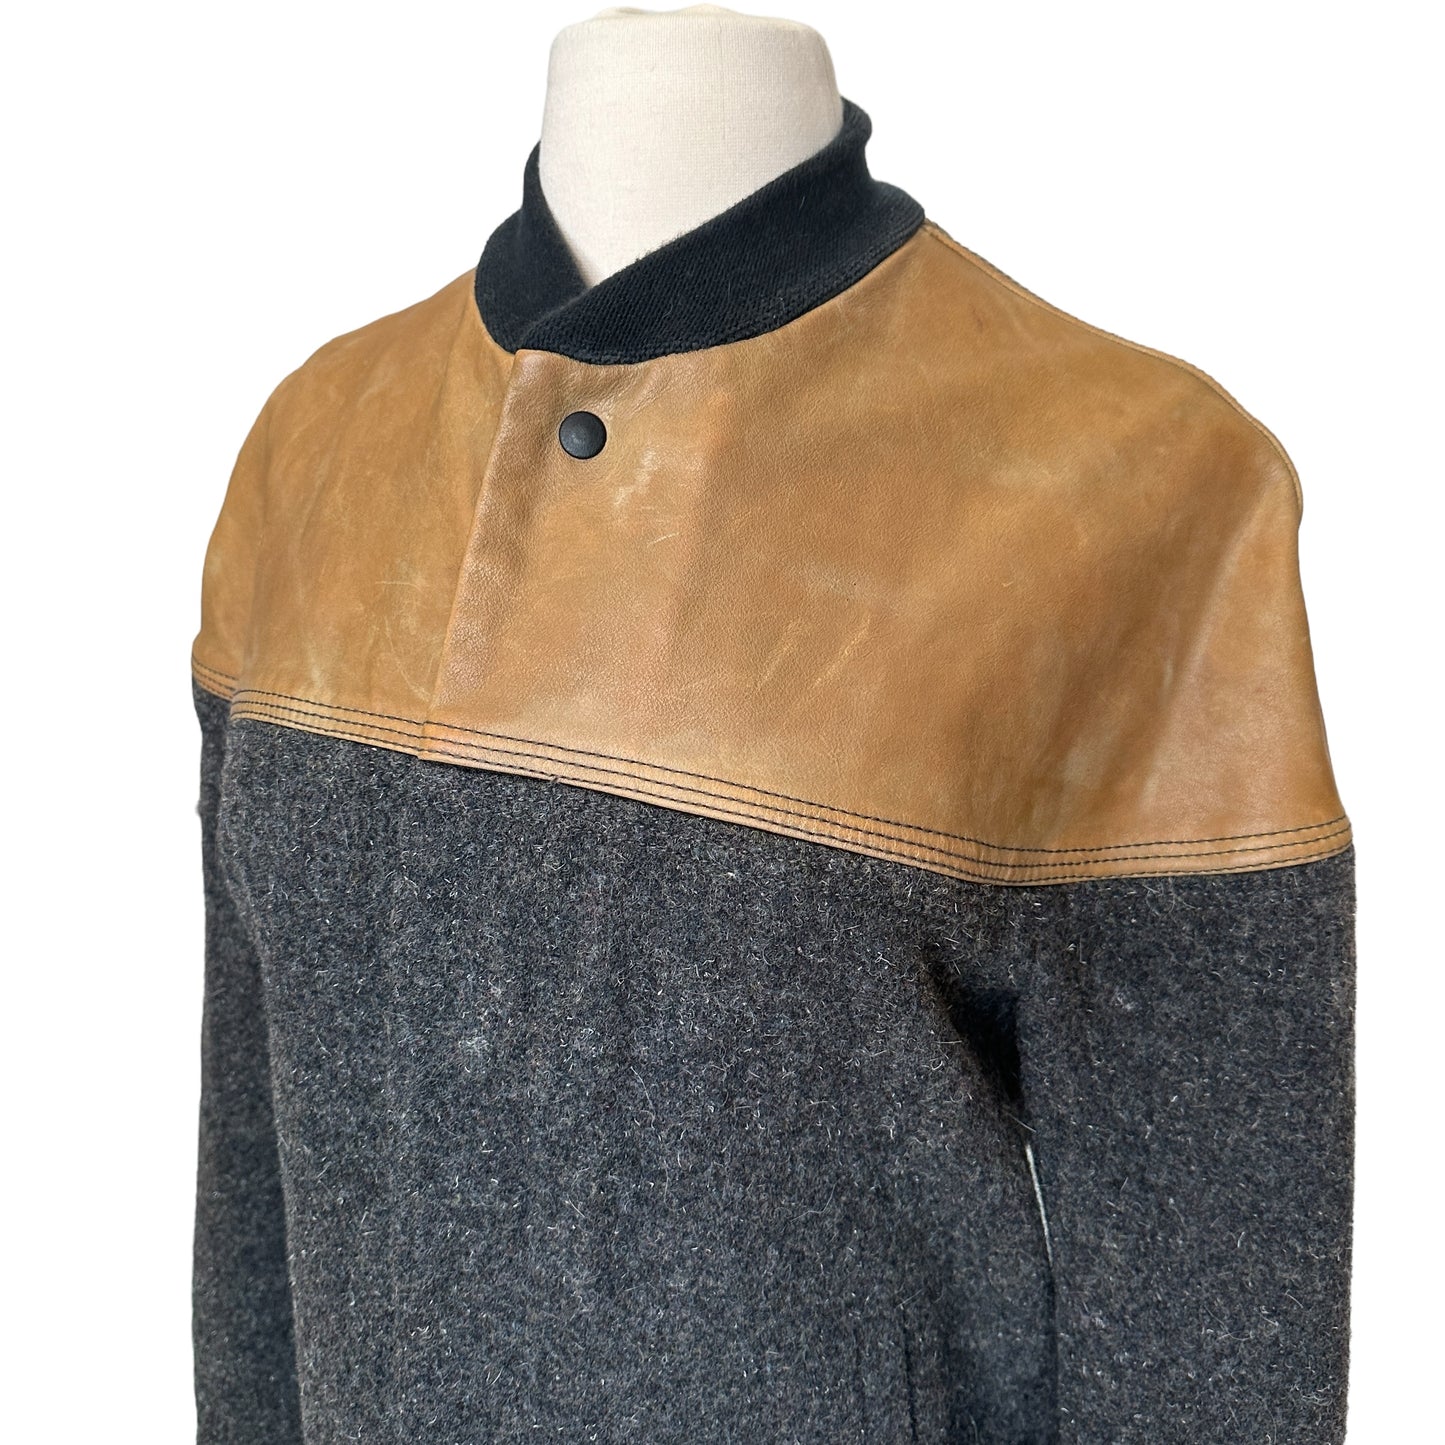 Vintage Wool & Leather Bomber Jacket - L